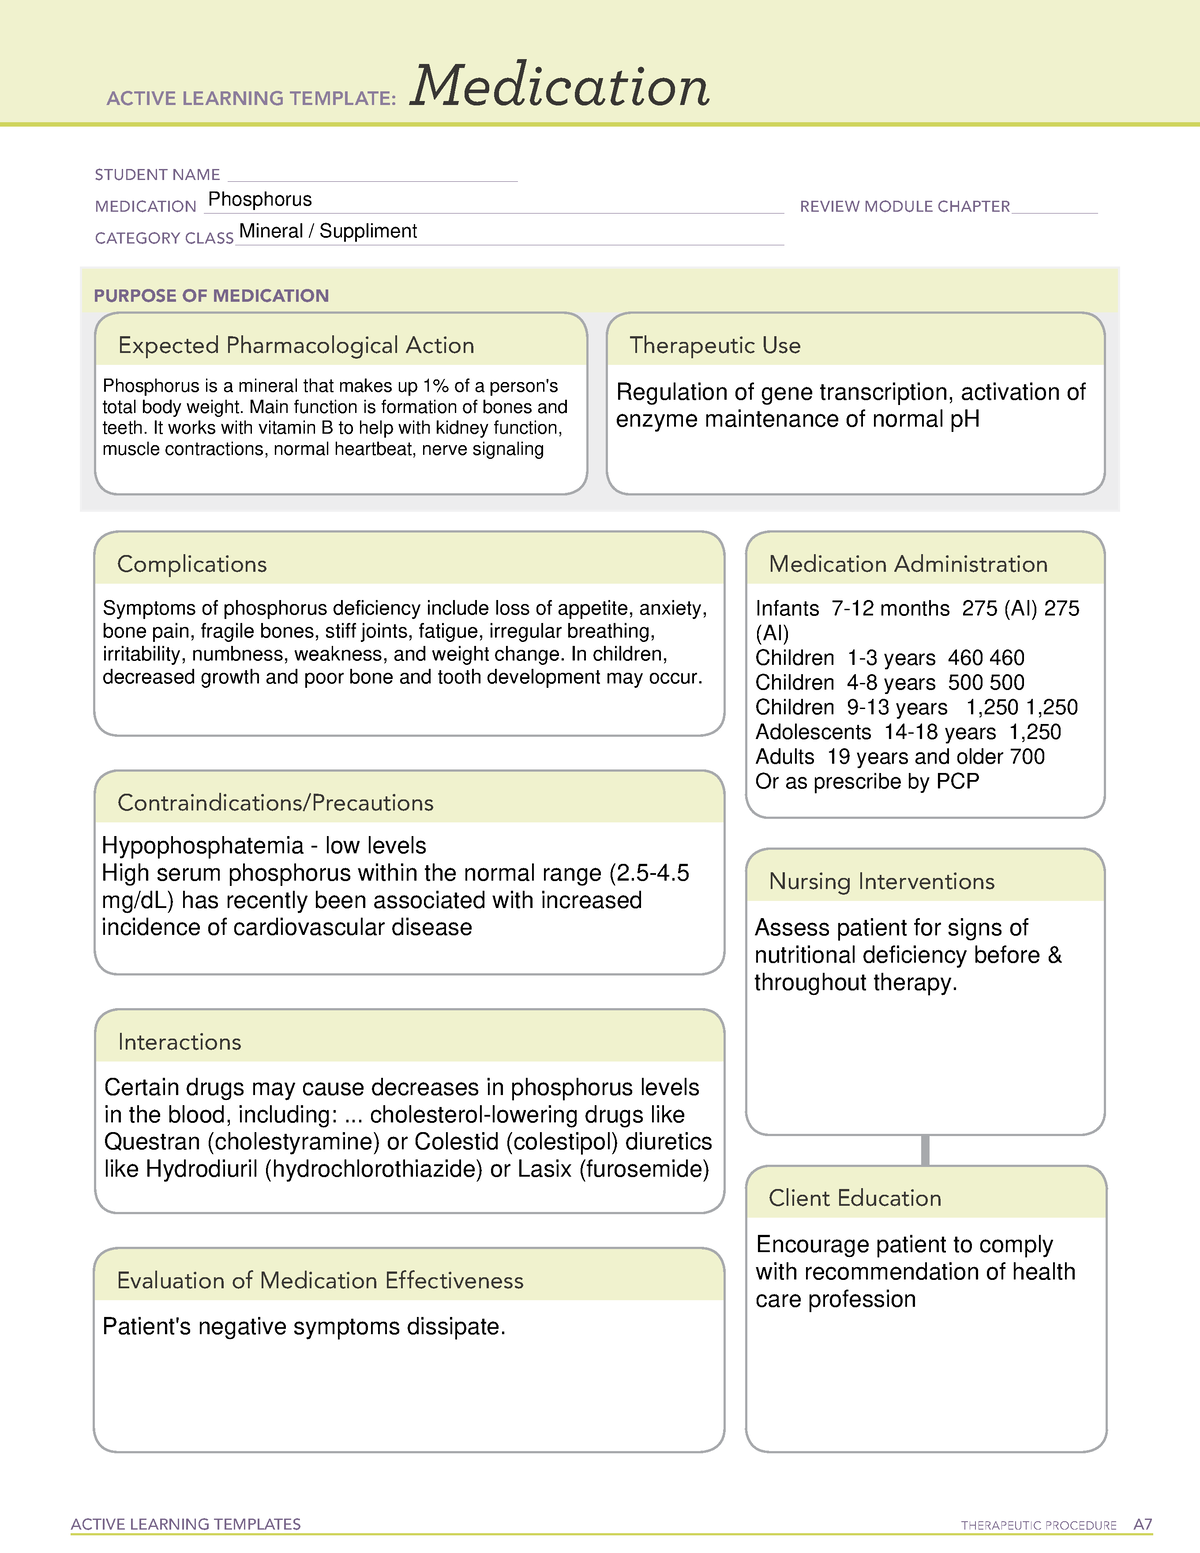 ati-phosphorus-medication-sheet-active-learning-templates-therapeutic-procedure-a-medication